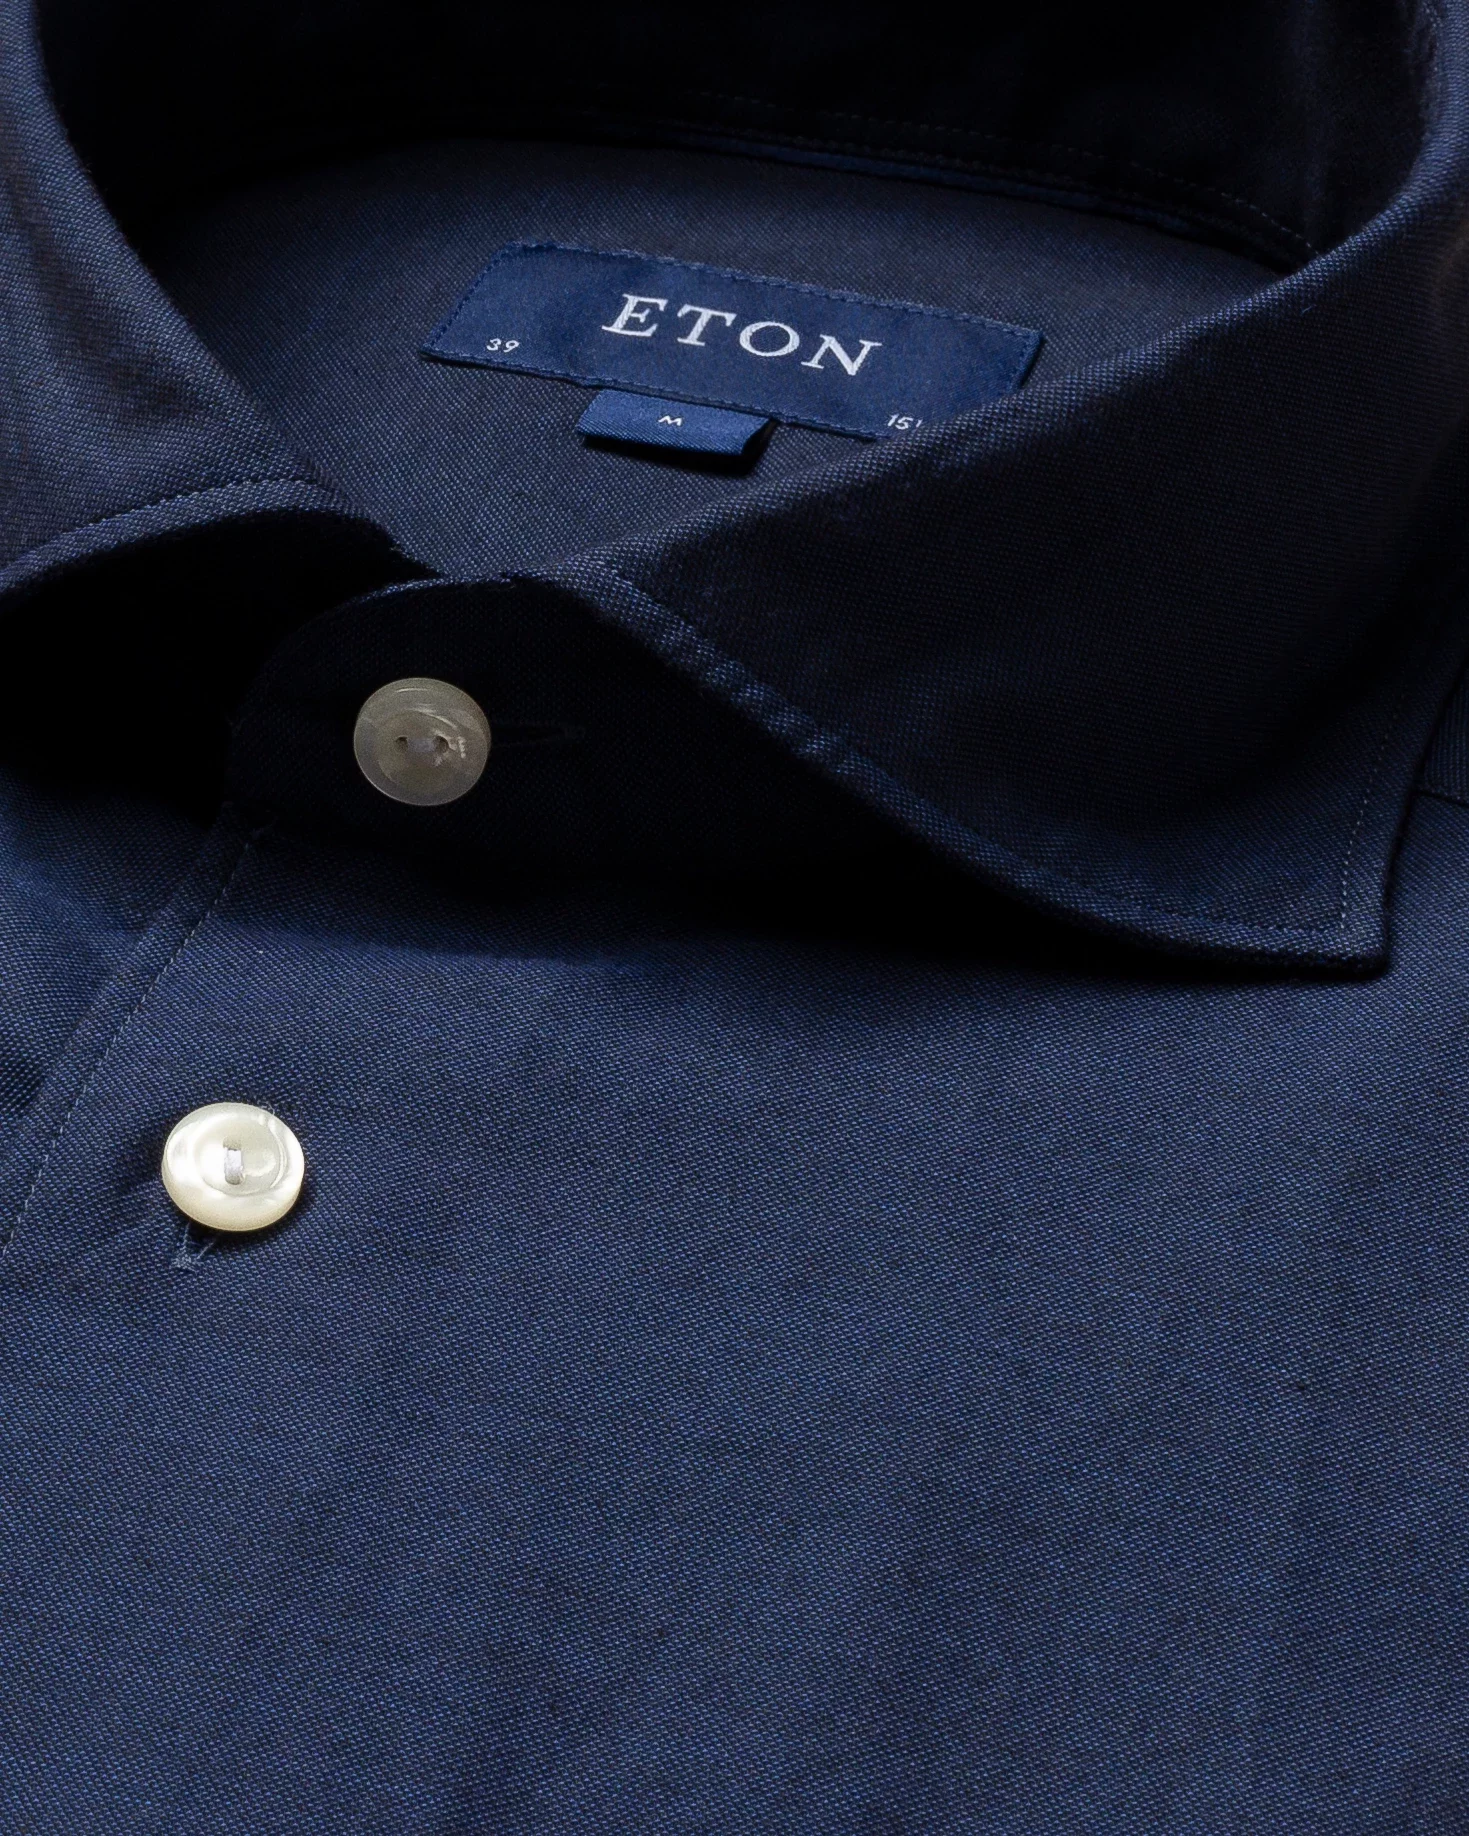 Eton - navy cotton silk shirt soft